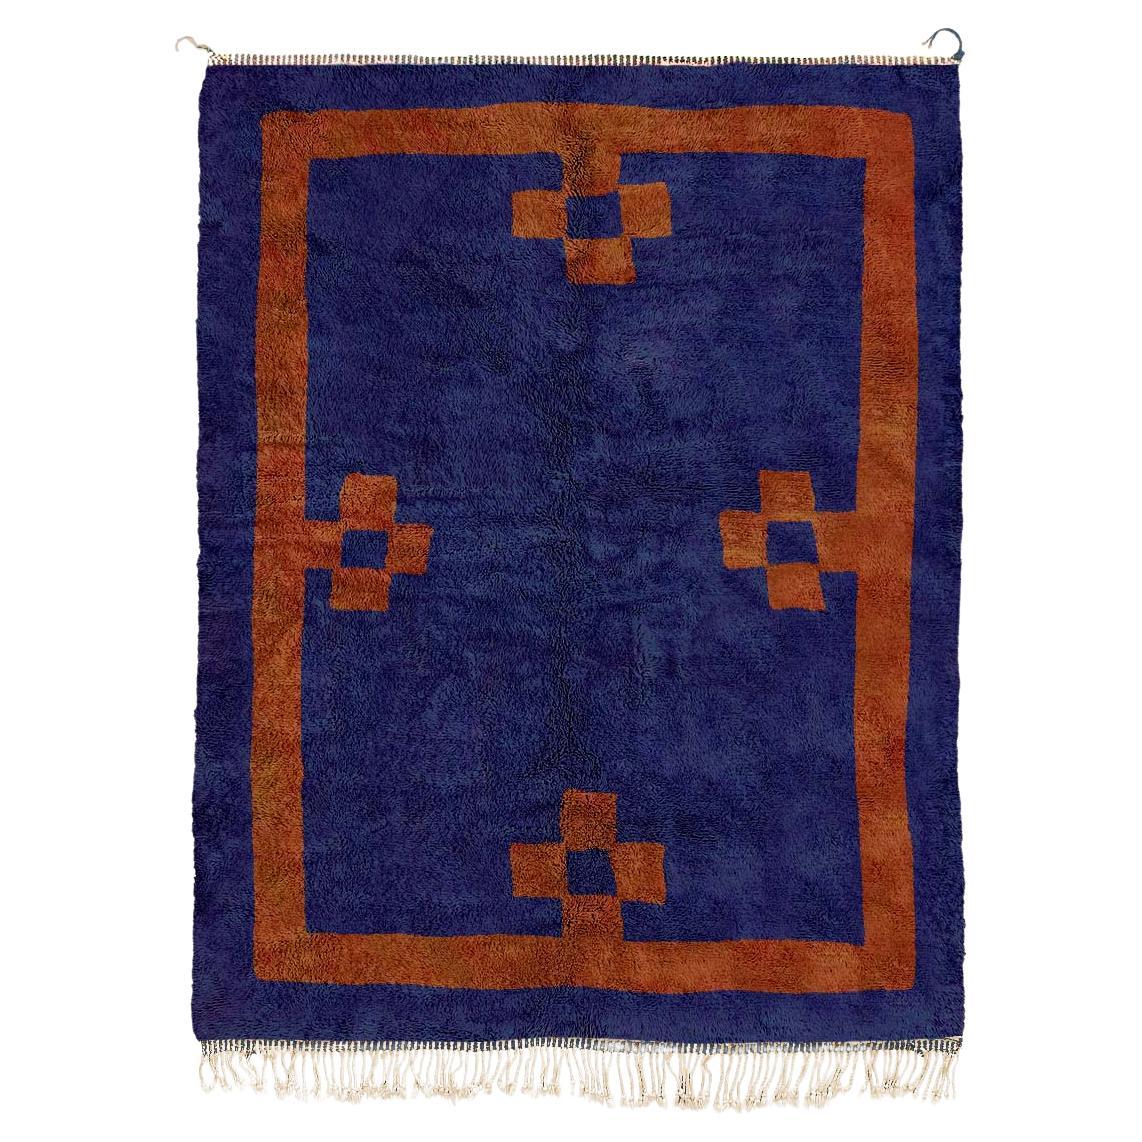 Moroccan Beni Mrirt rug 9’x12’, Deep Blue Color Red Crosses Pattern, Custom-Made For Sale